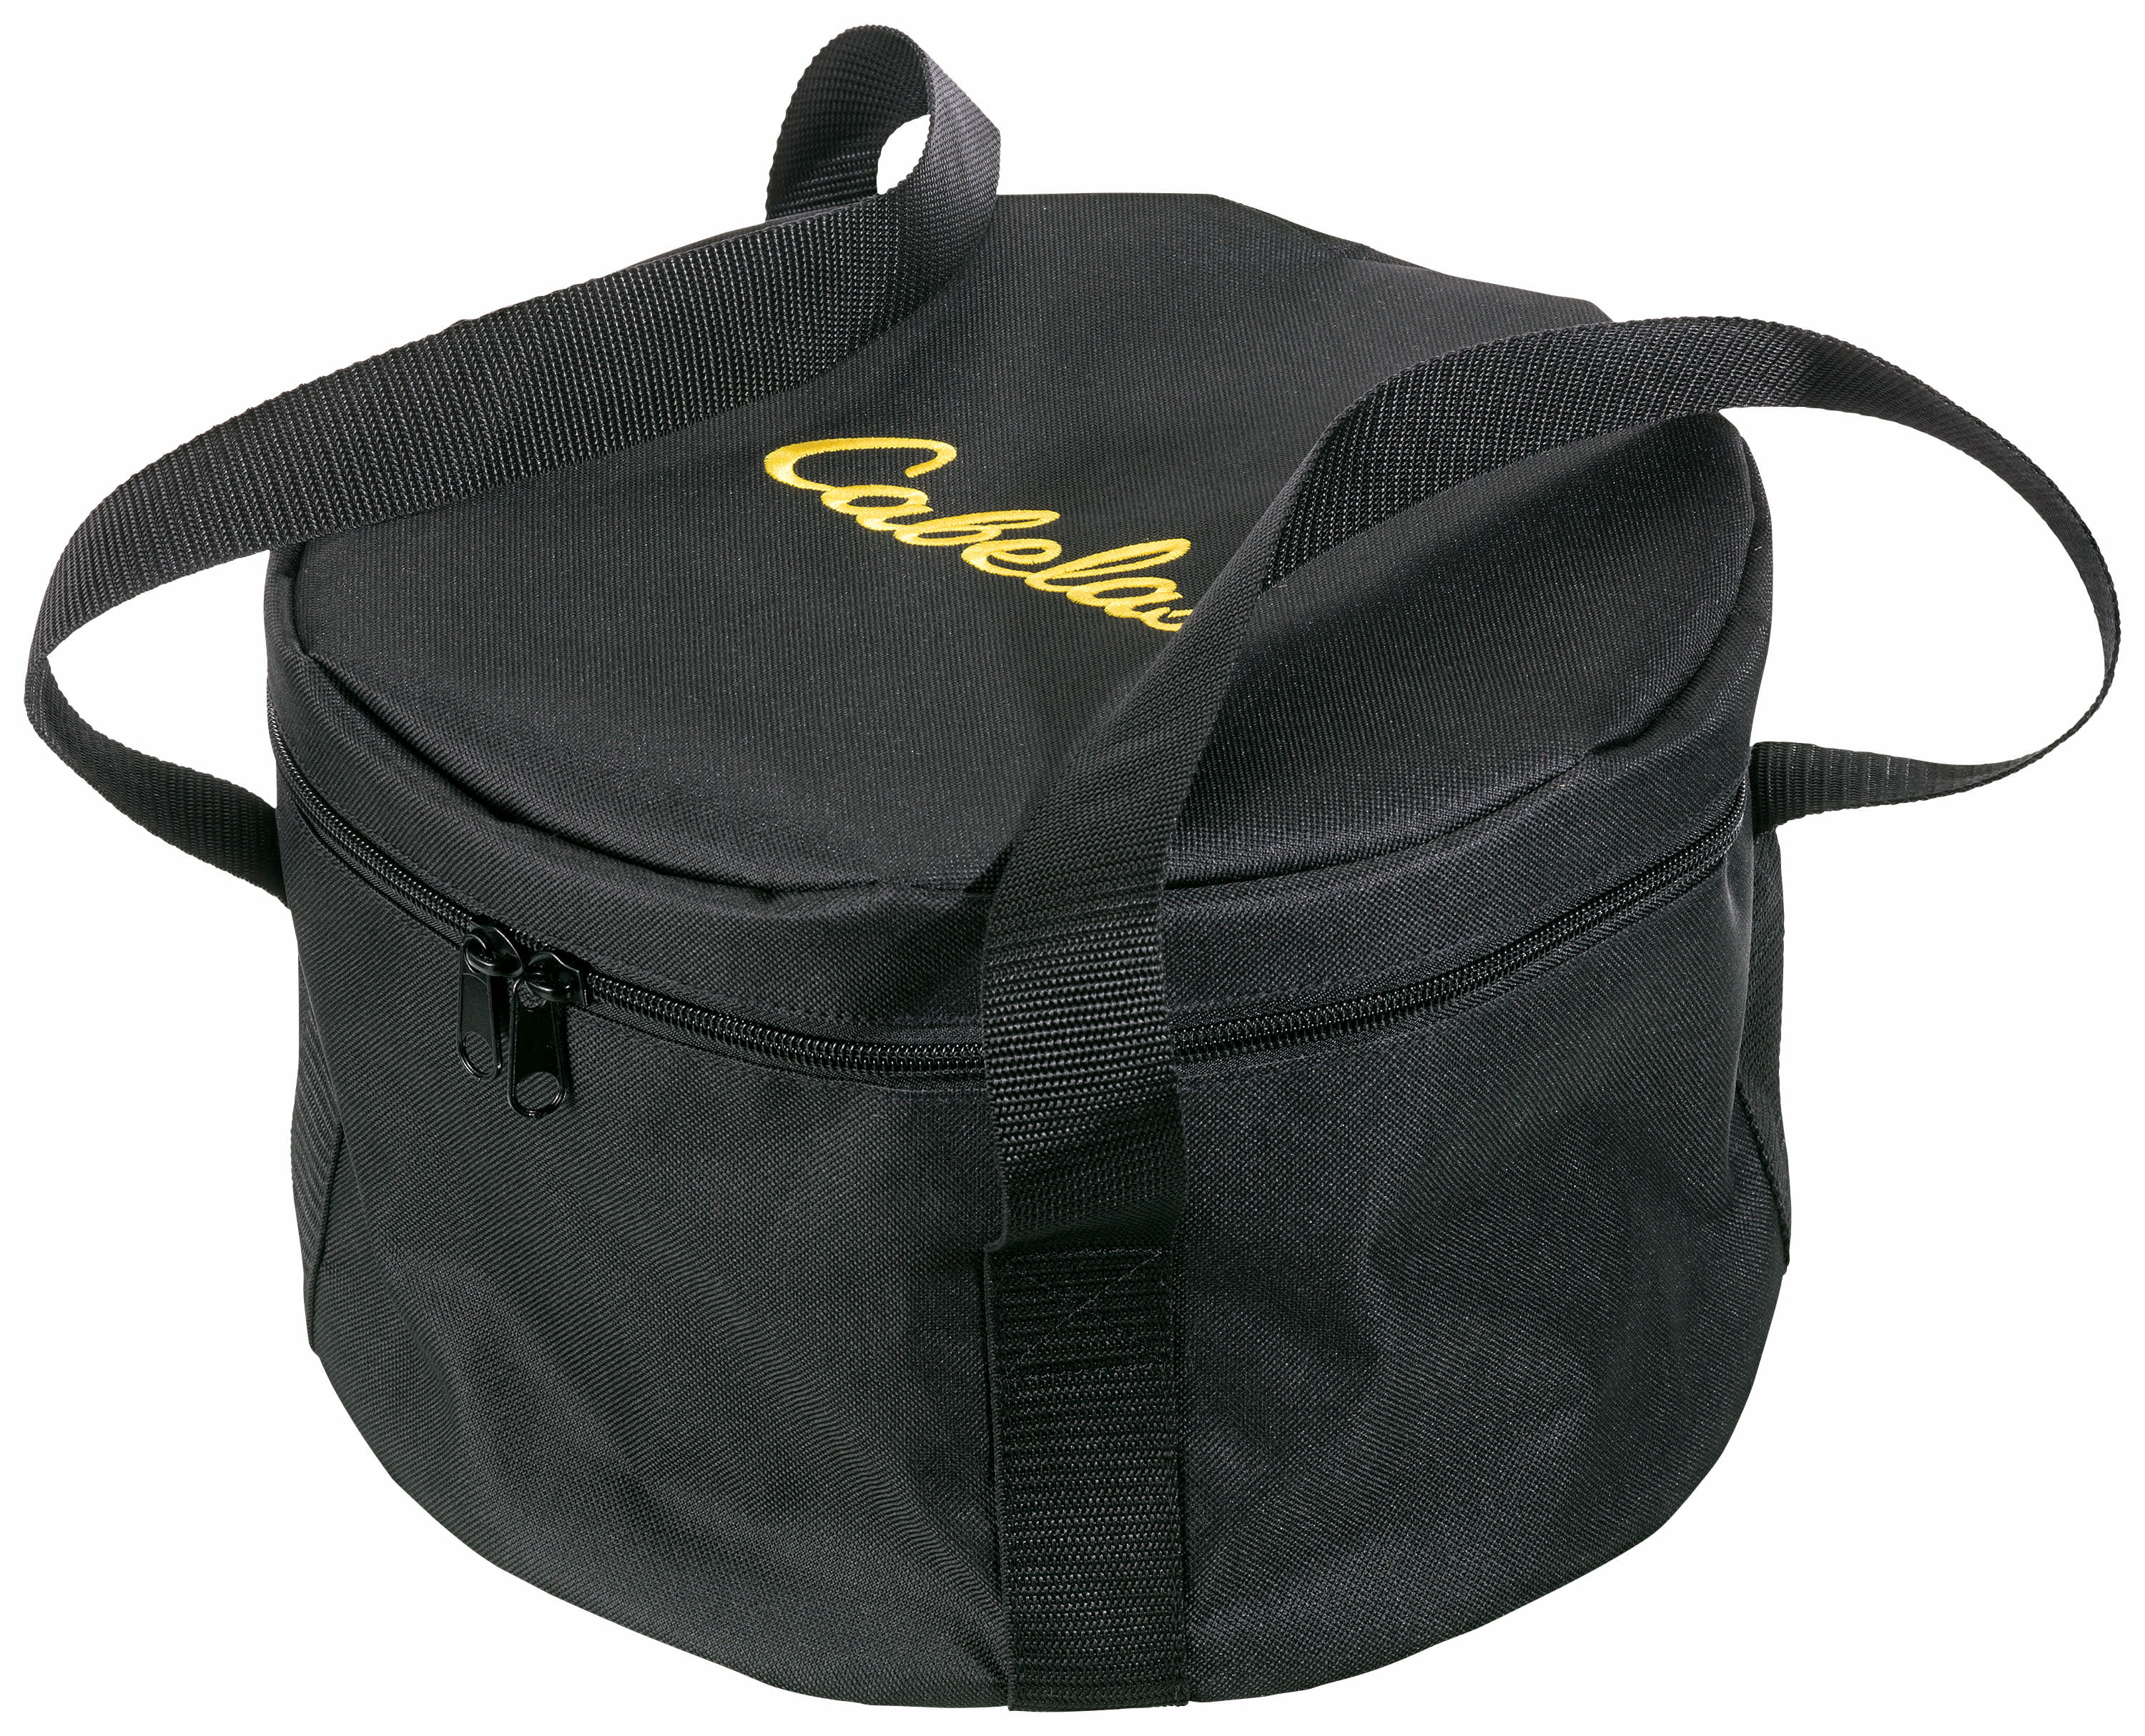 Tackle Bags  Cabela's Canada